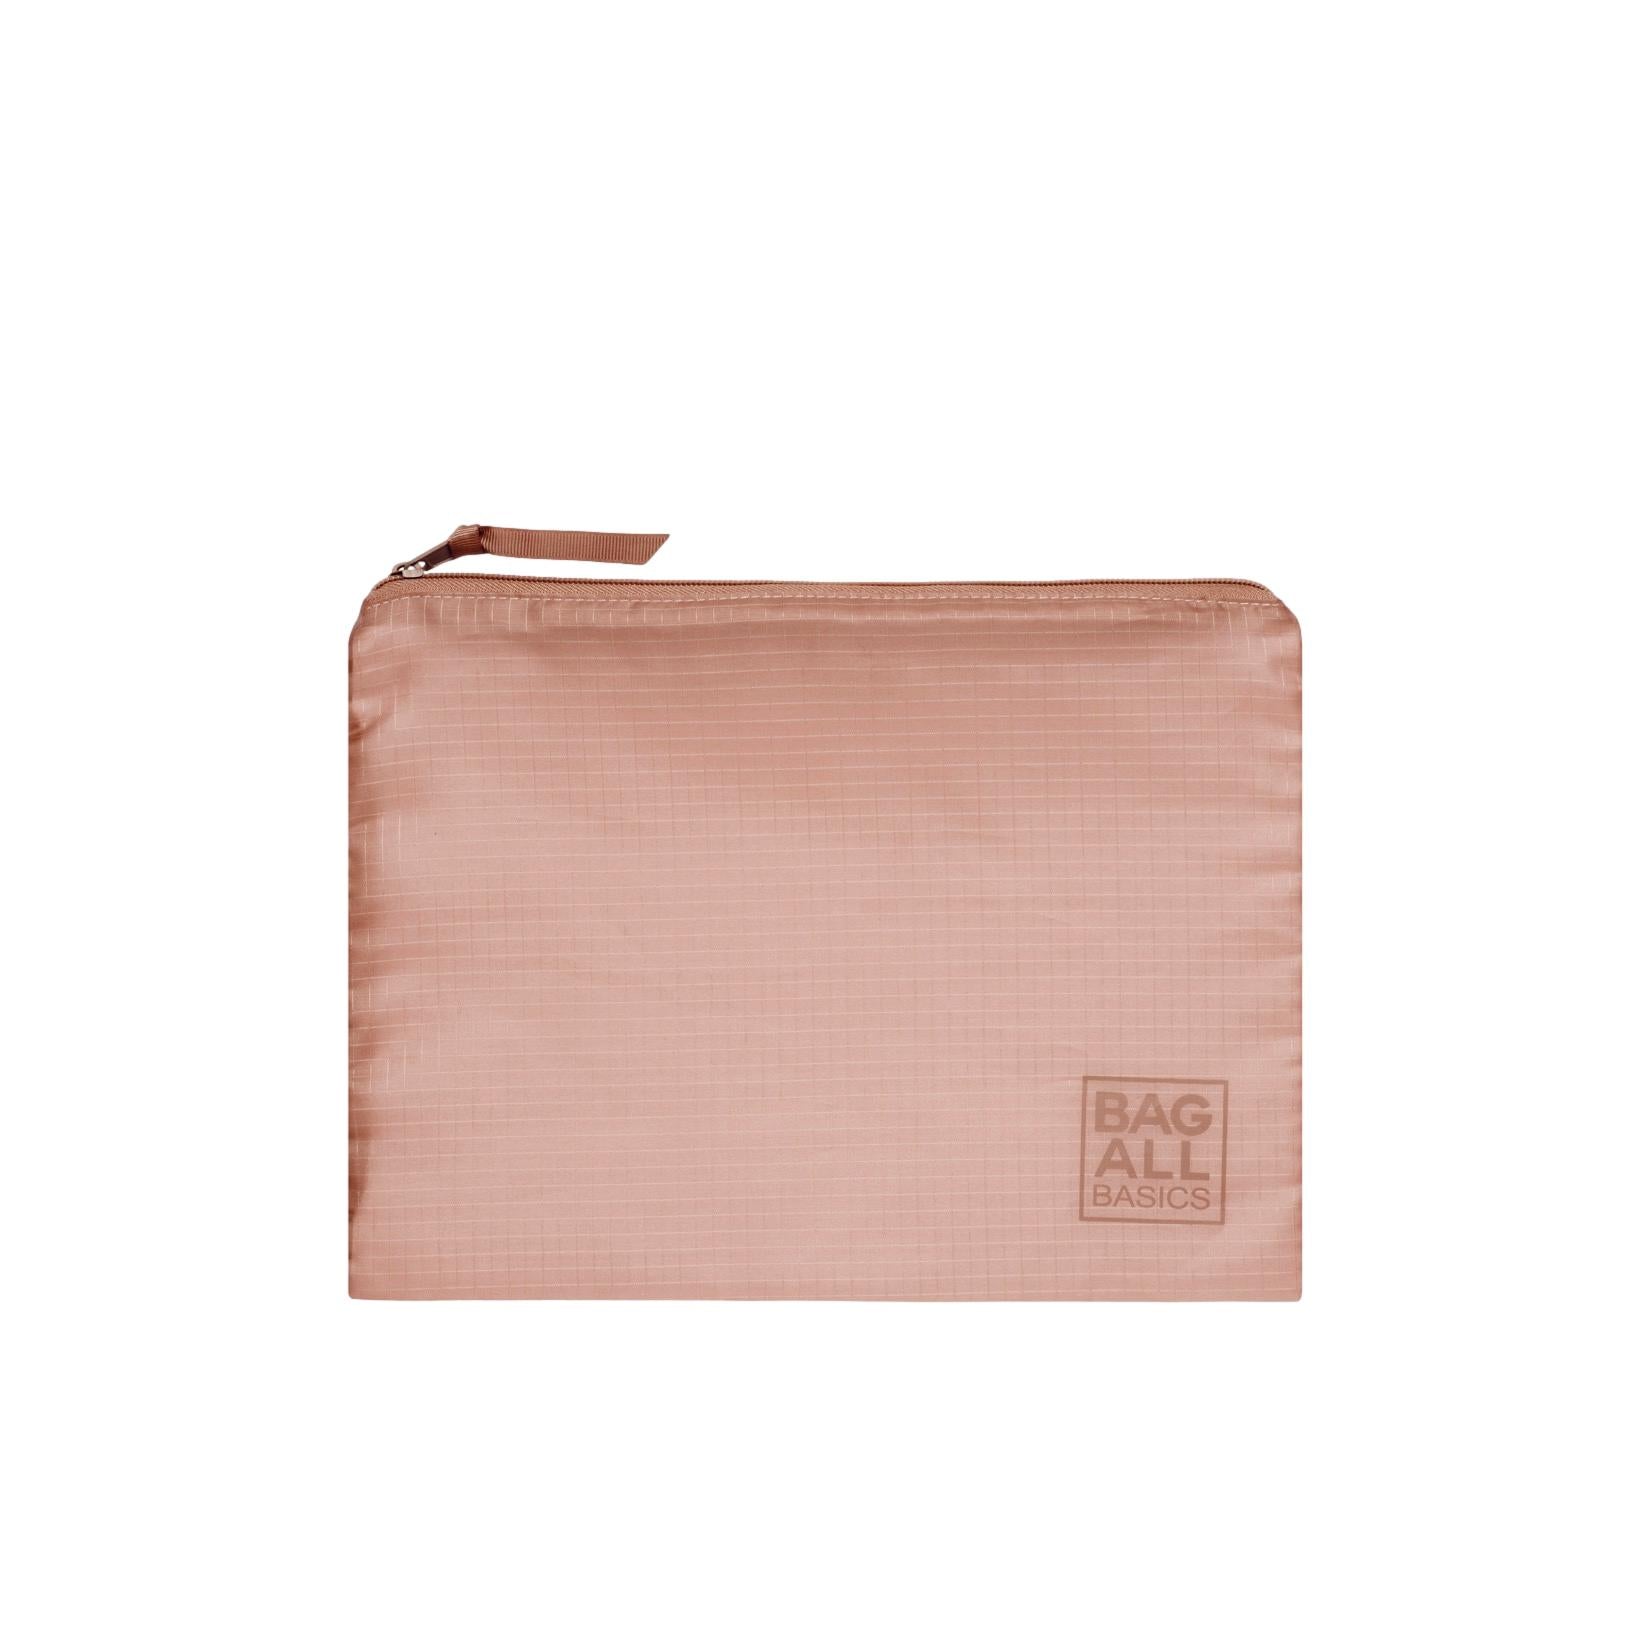 Bag-all Basic Packing Bags Set, 8-pack, Pink/Blush | Bag-all